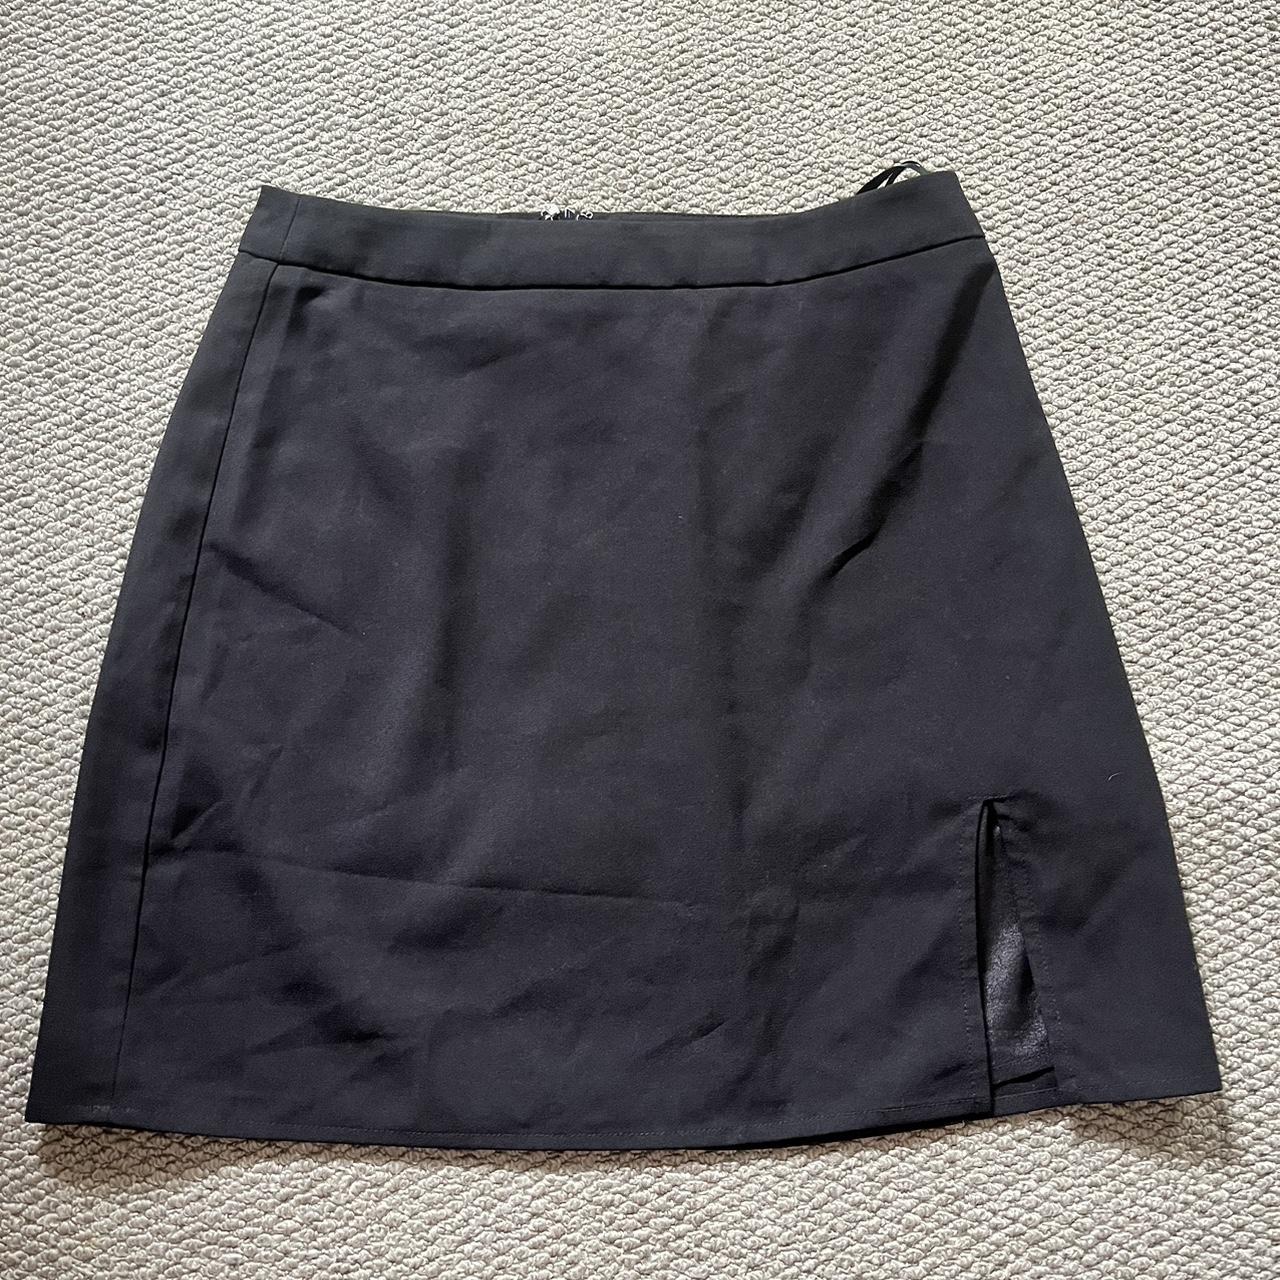 Whitefox - black mini skirt Size small - Depop